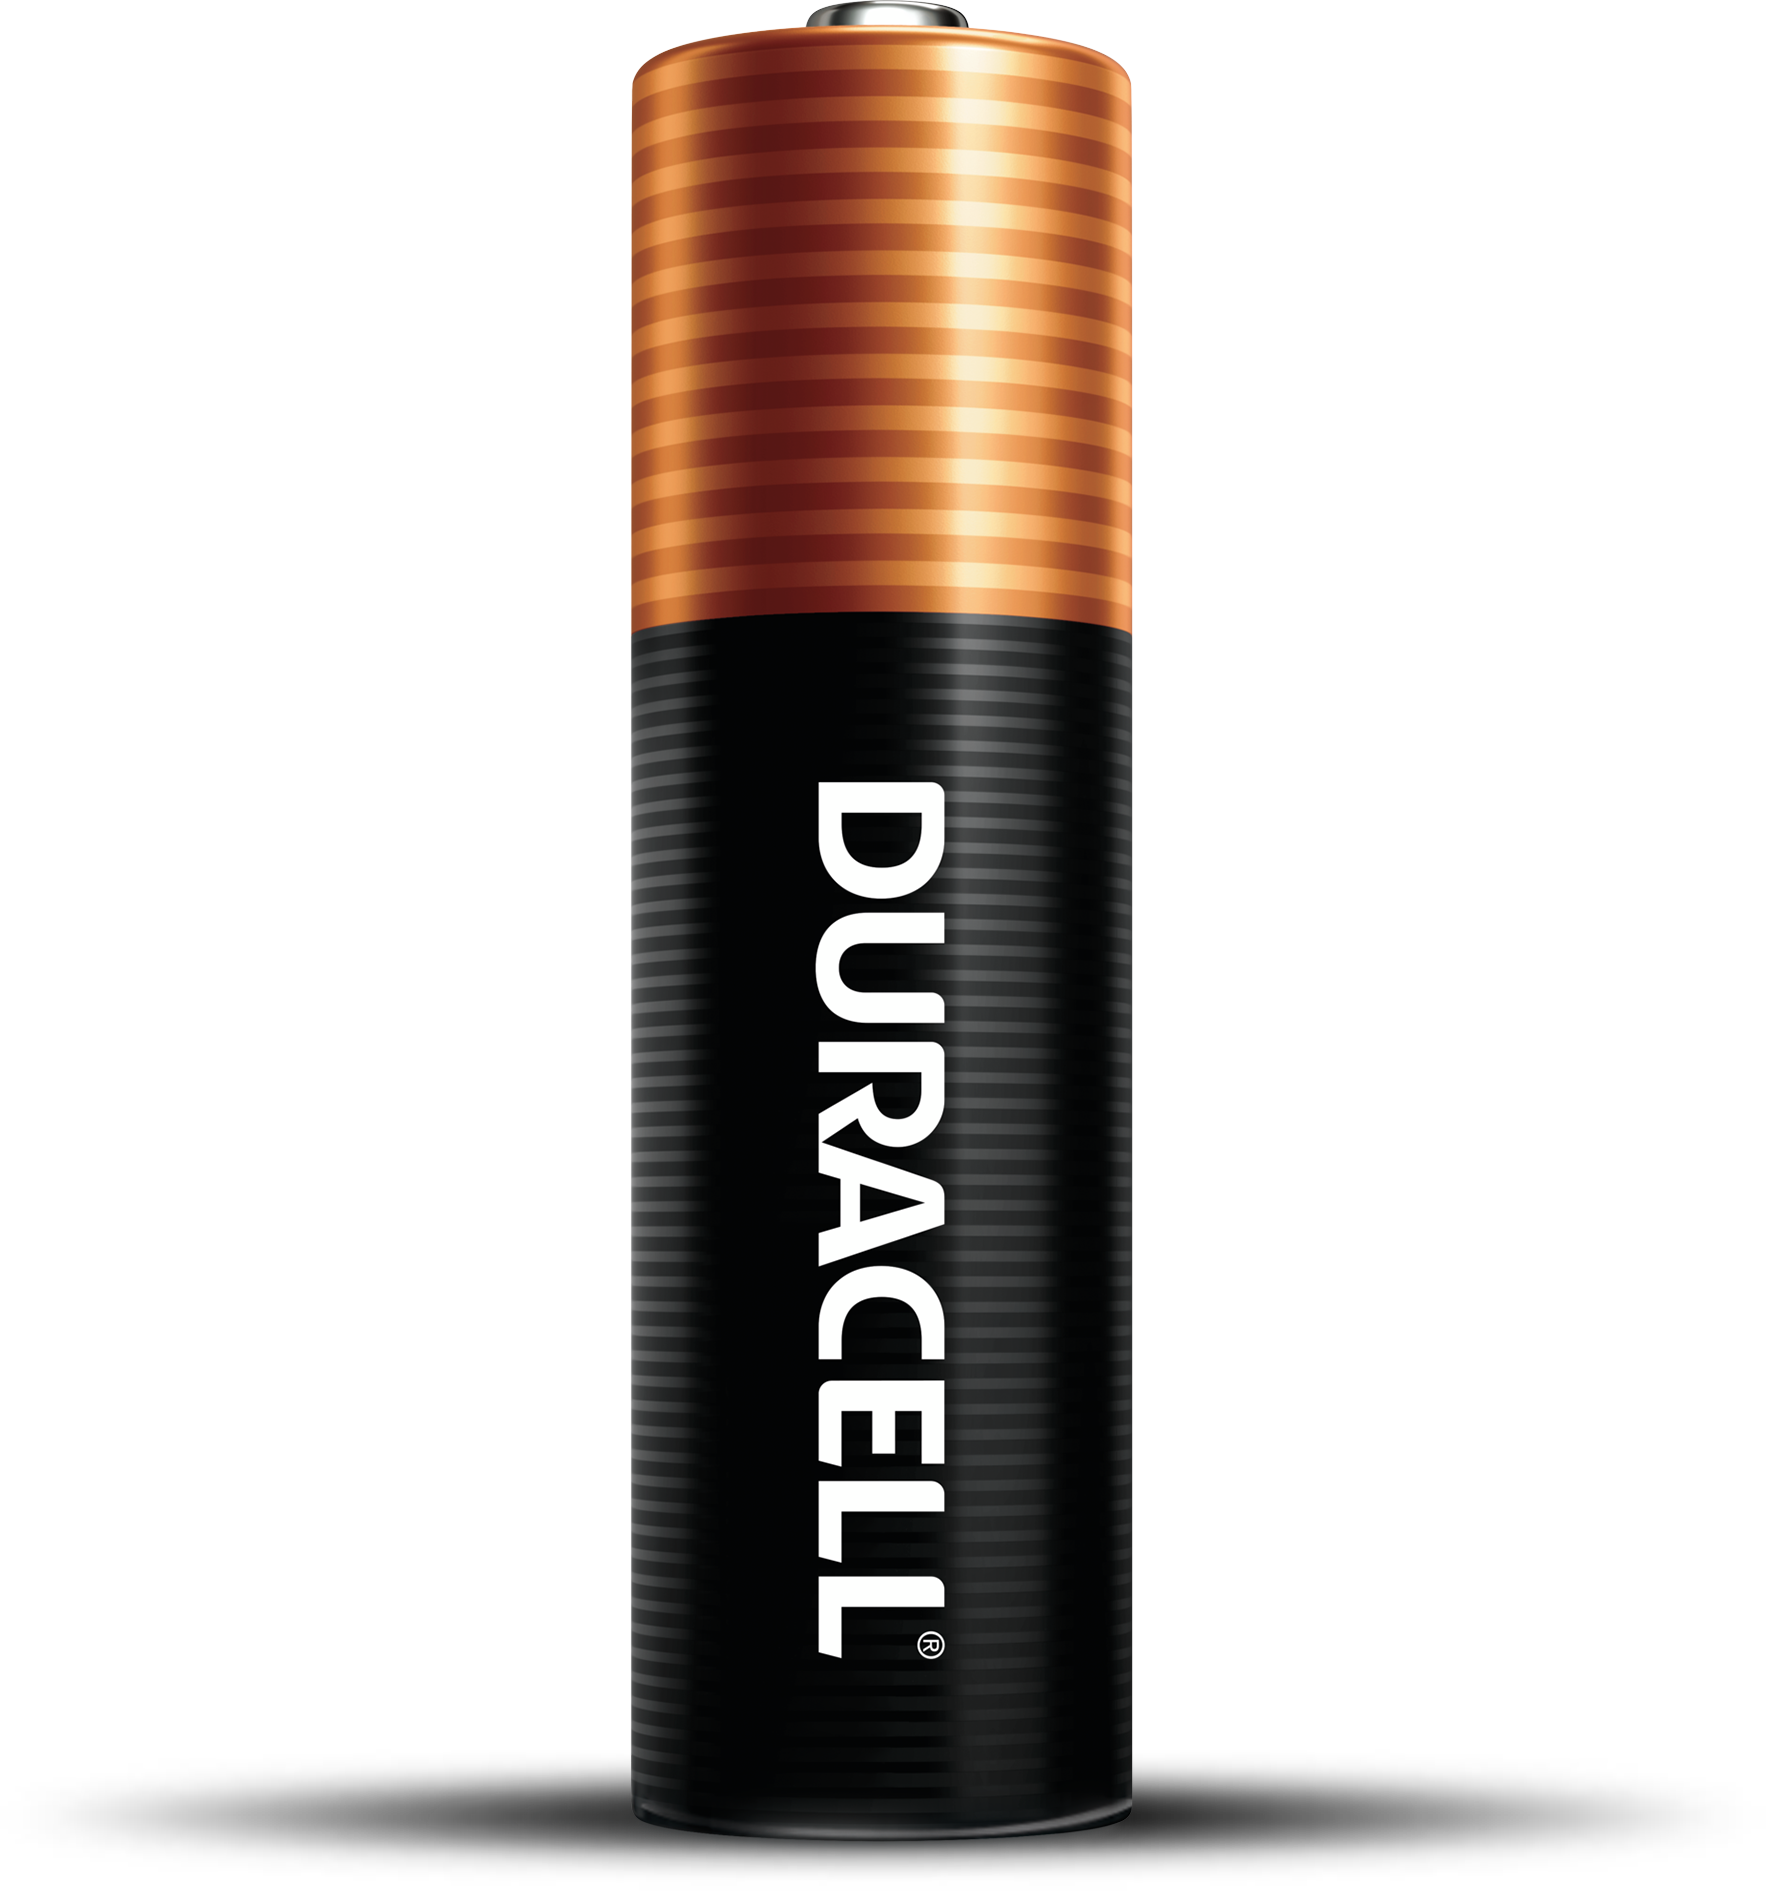 Las mejores ofertas en Pilas recargables Duracell 1.5 V